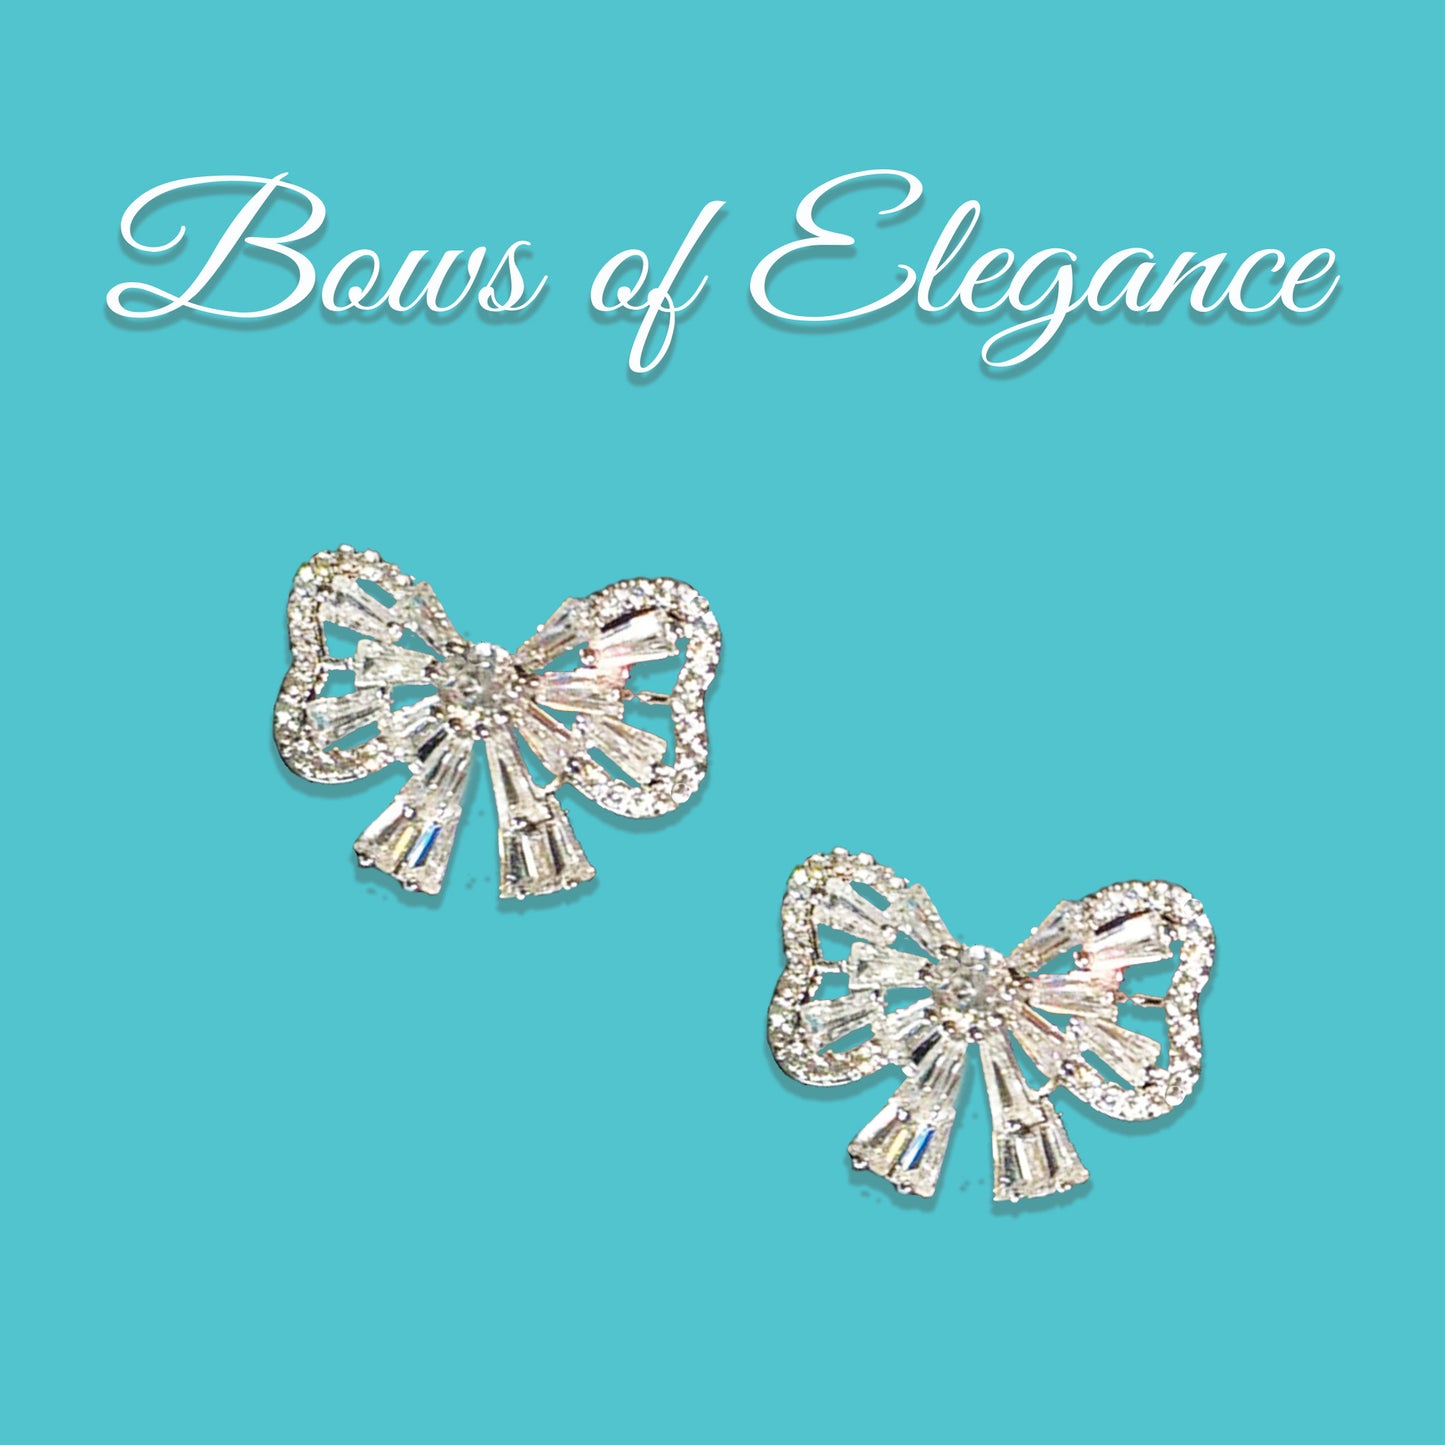 Bows of Elegance